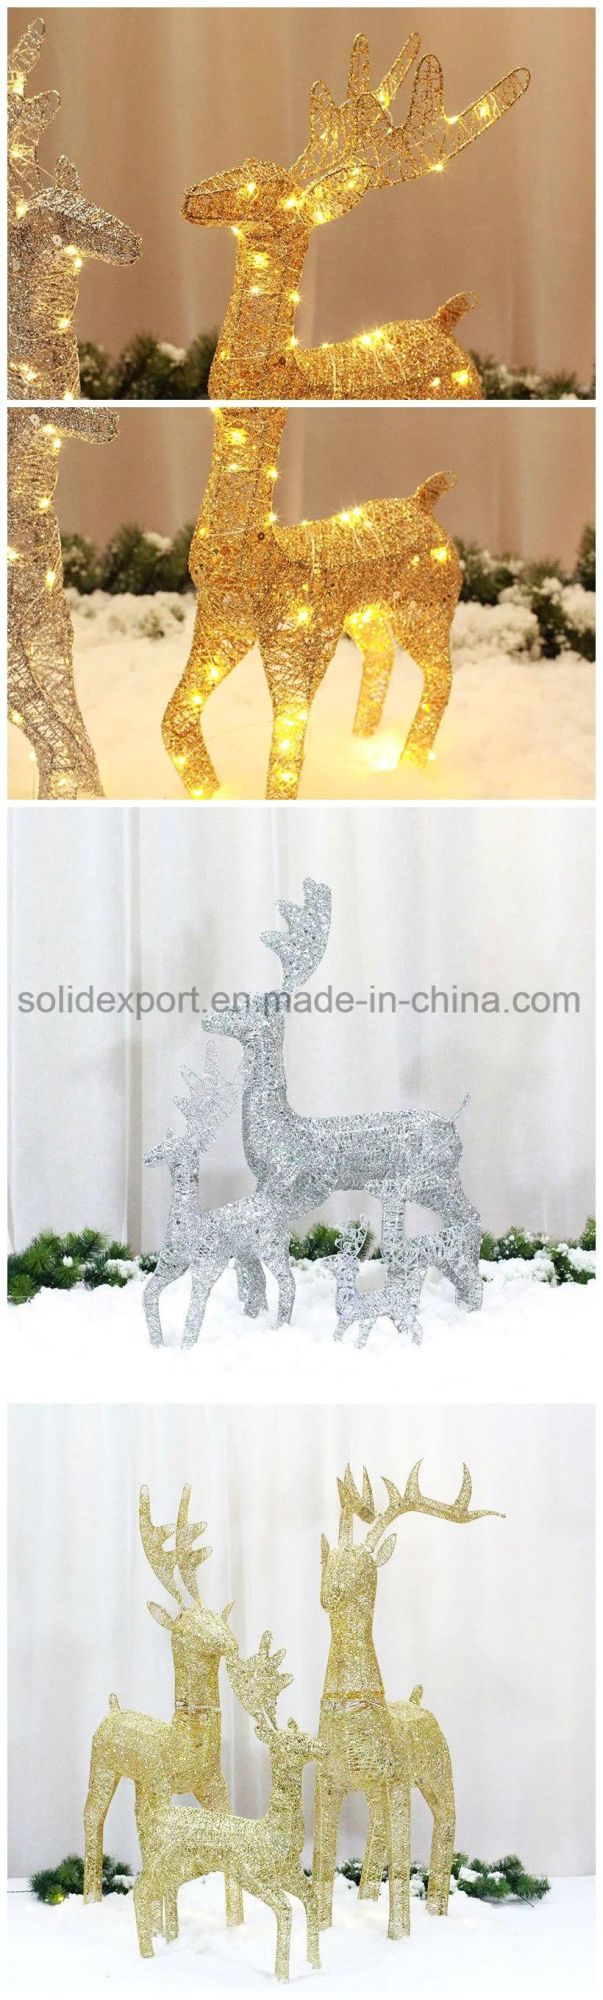 Iron Deer Display Christmas Decoration for Shop Window Shop Mall